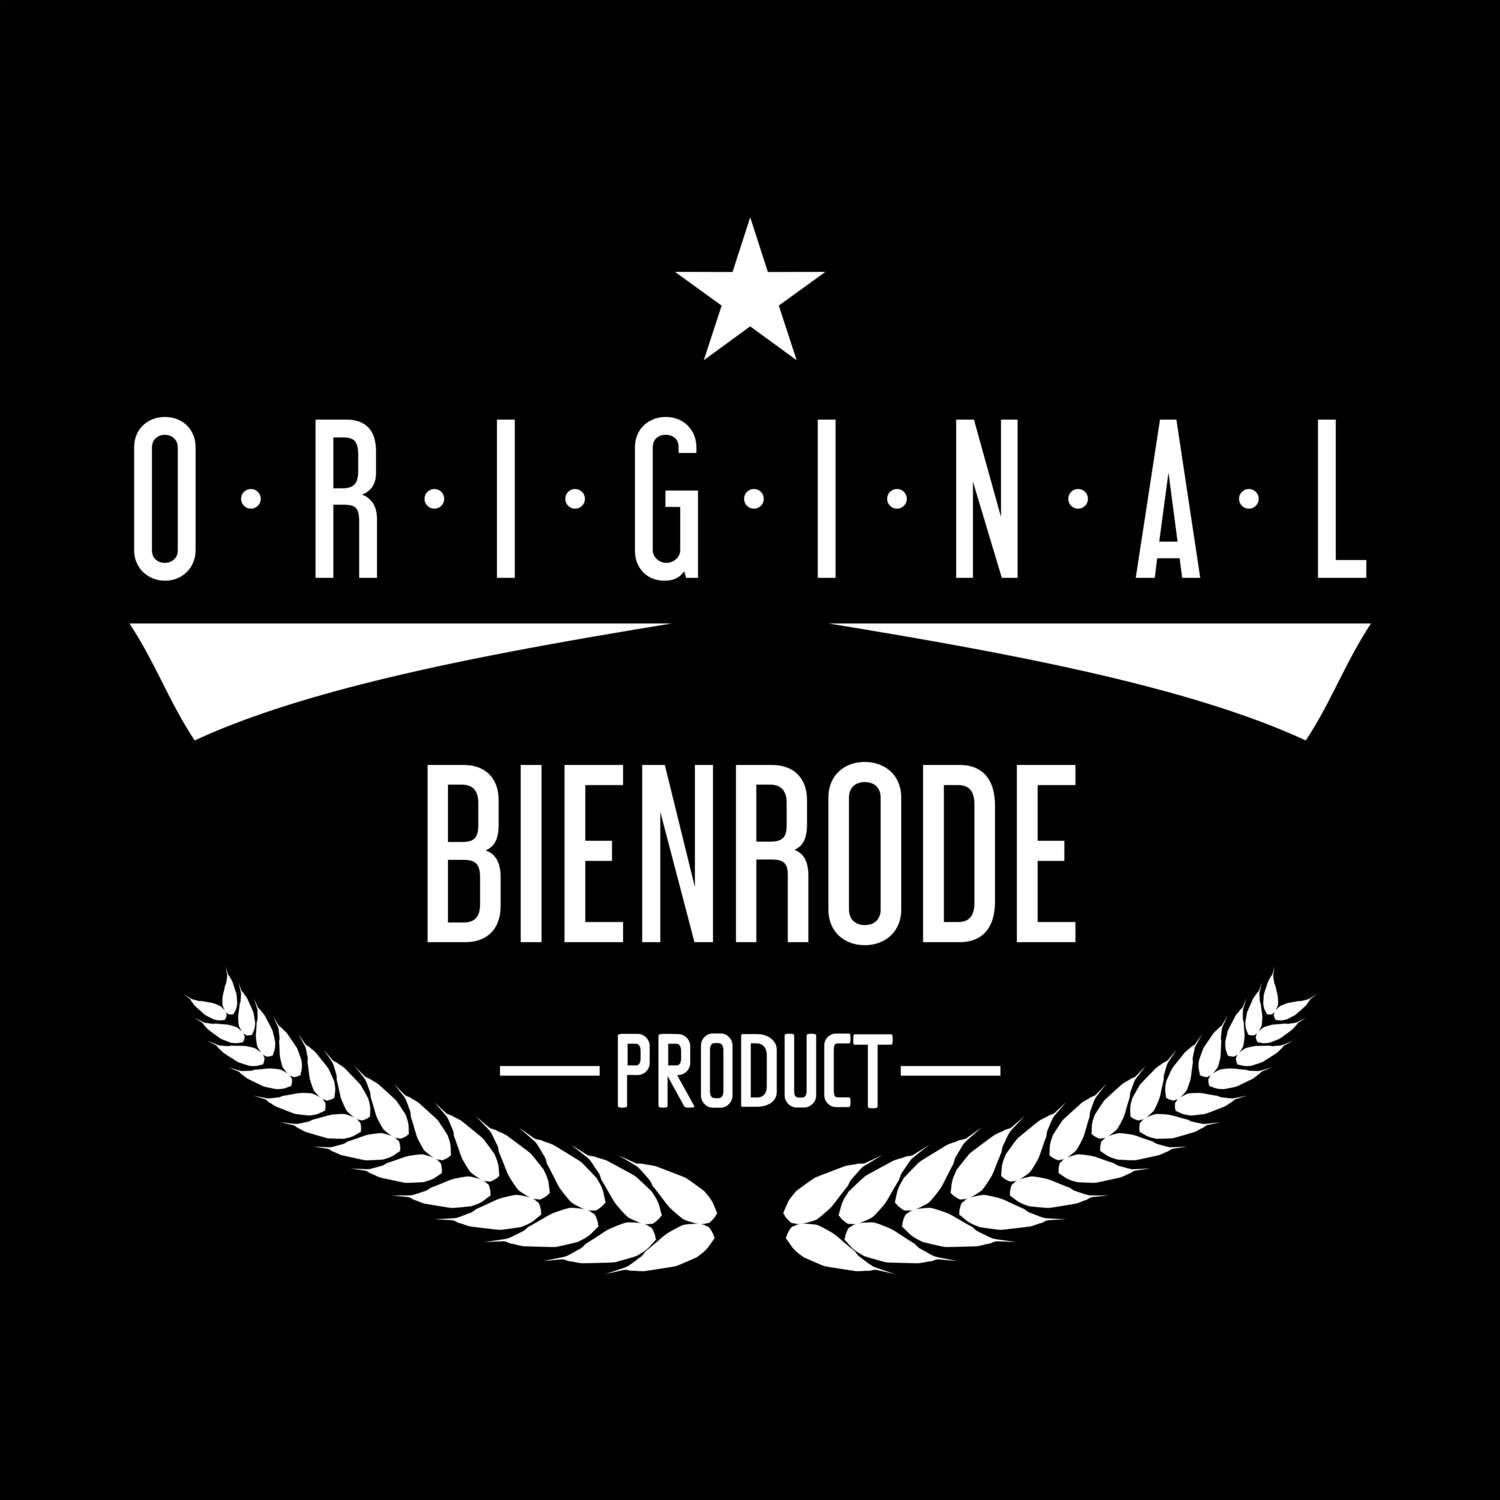 Bienrode T-Shirt »Original Product«